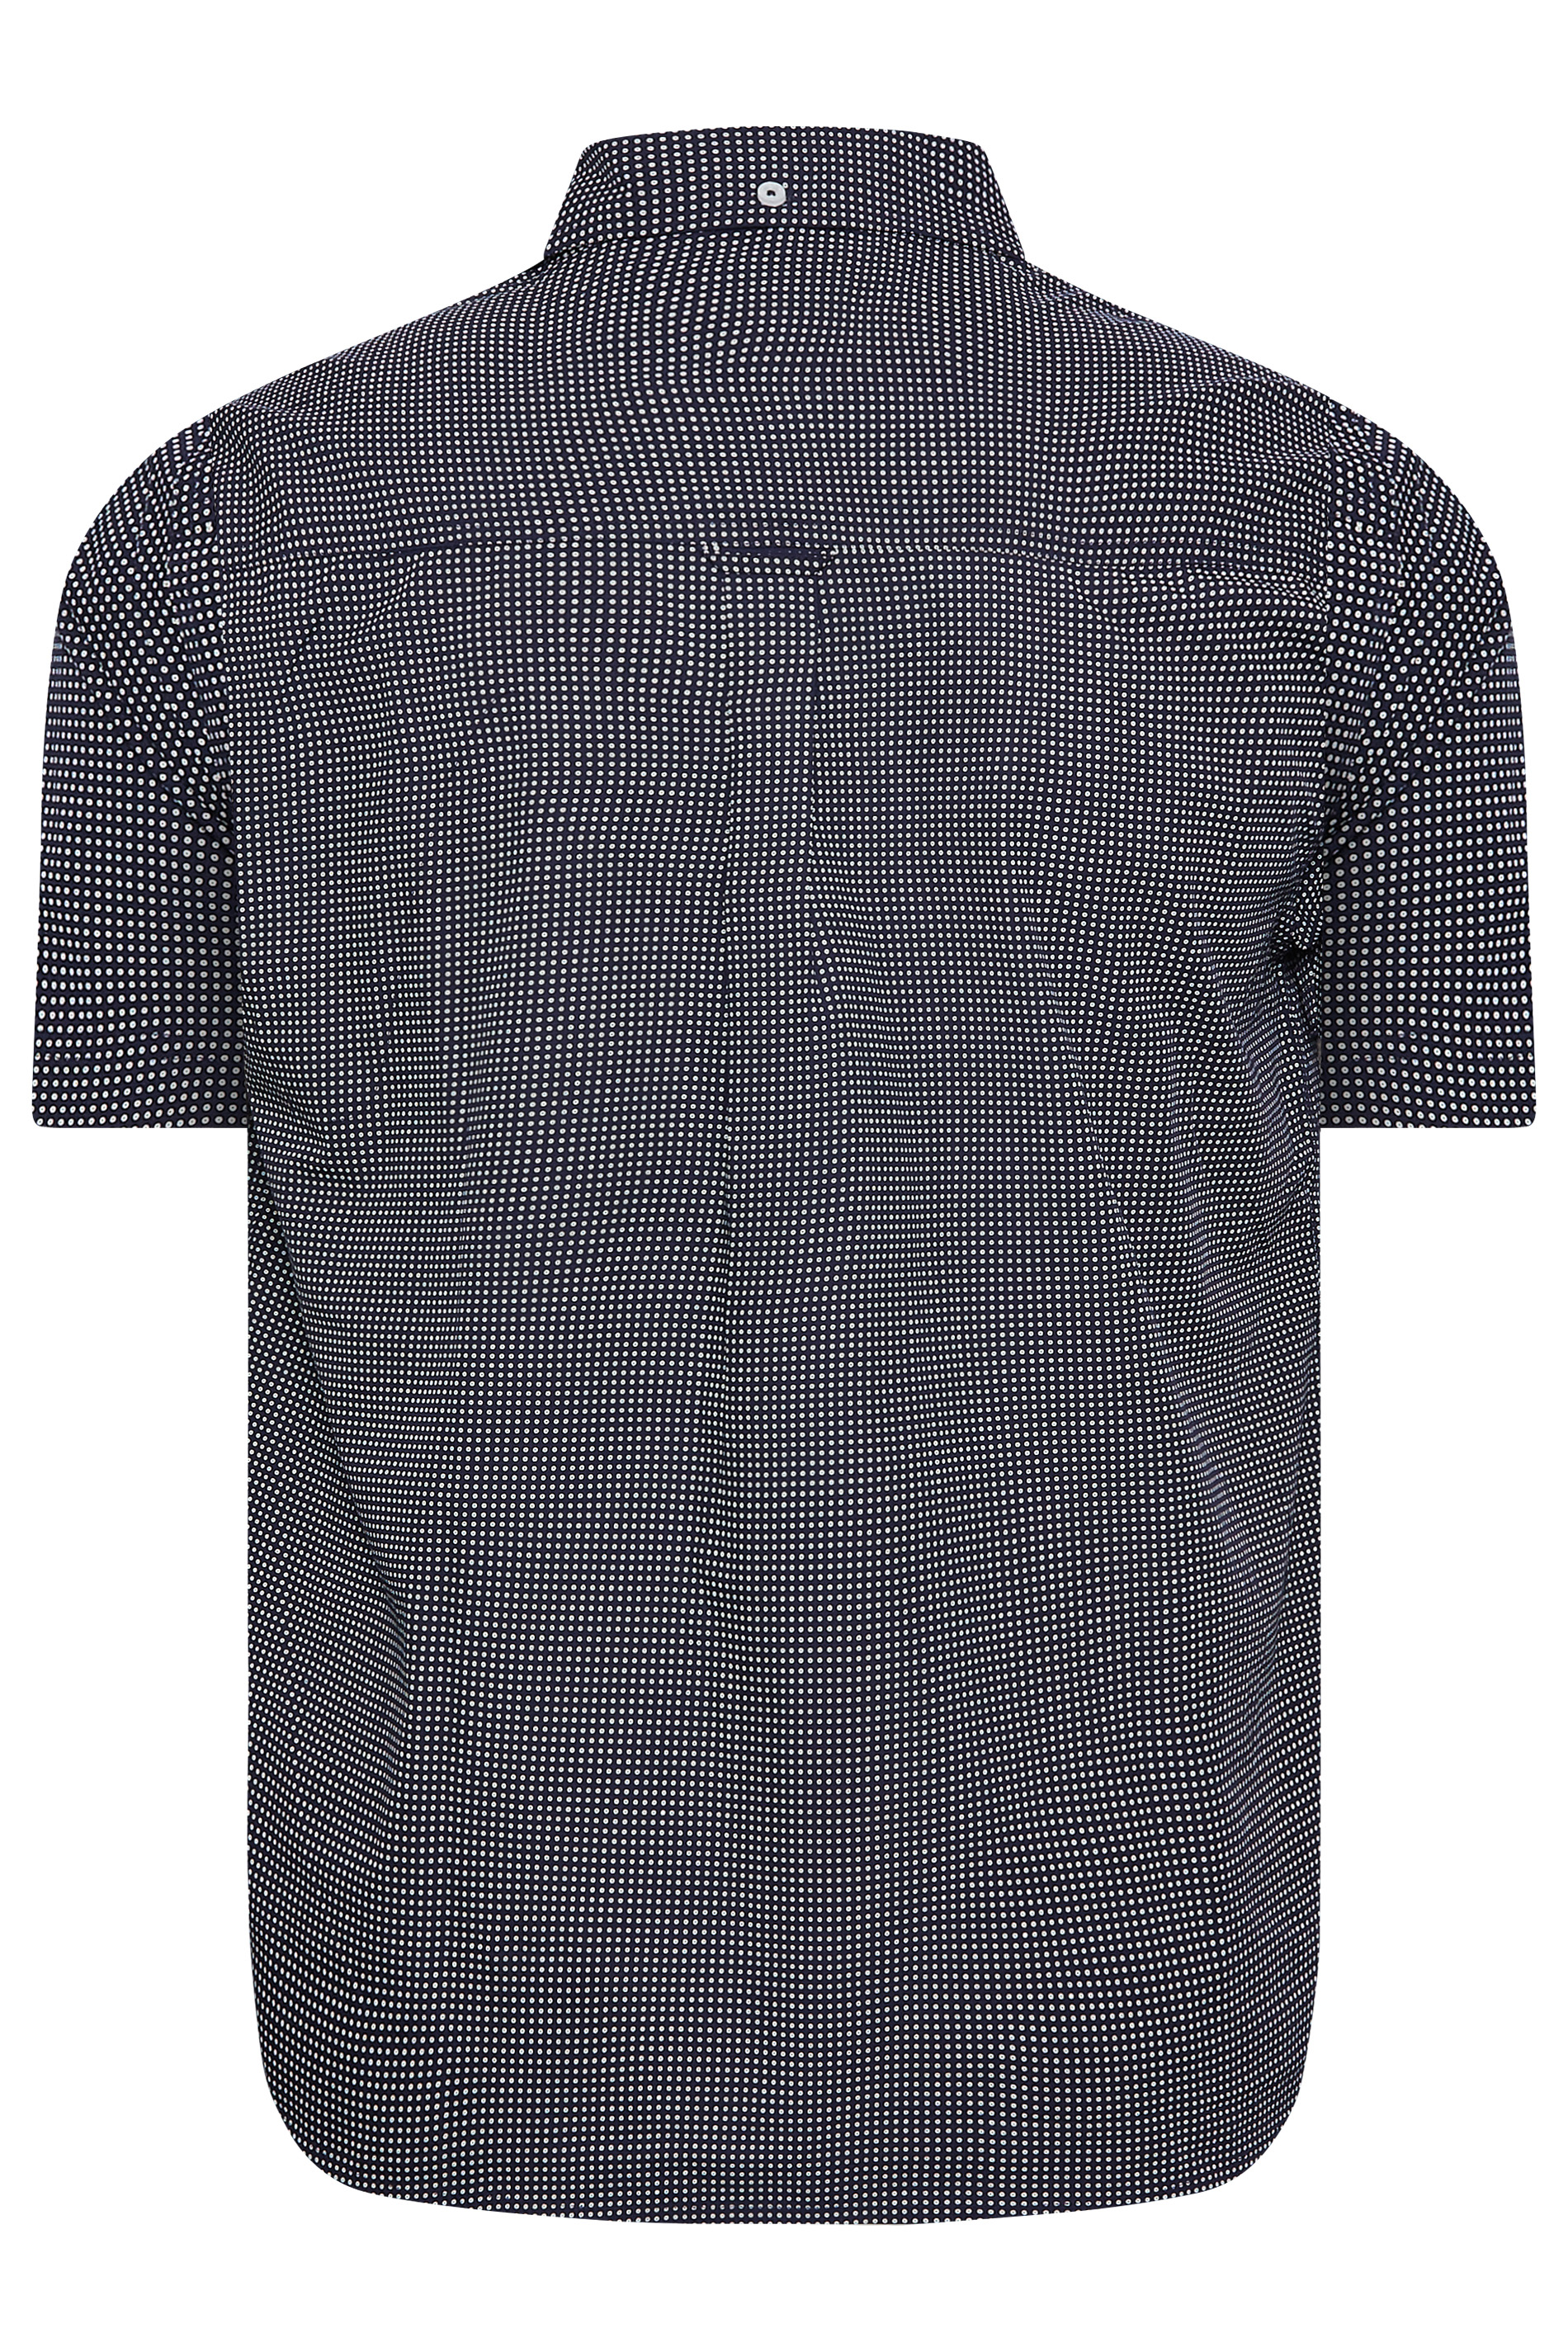 BadRhino Big & Tall Navy Blue Spot Print Short Sleeve Shirt | BadRhino 3